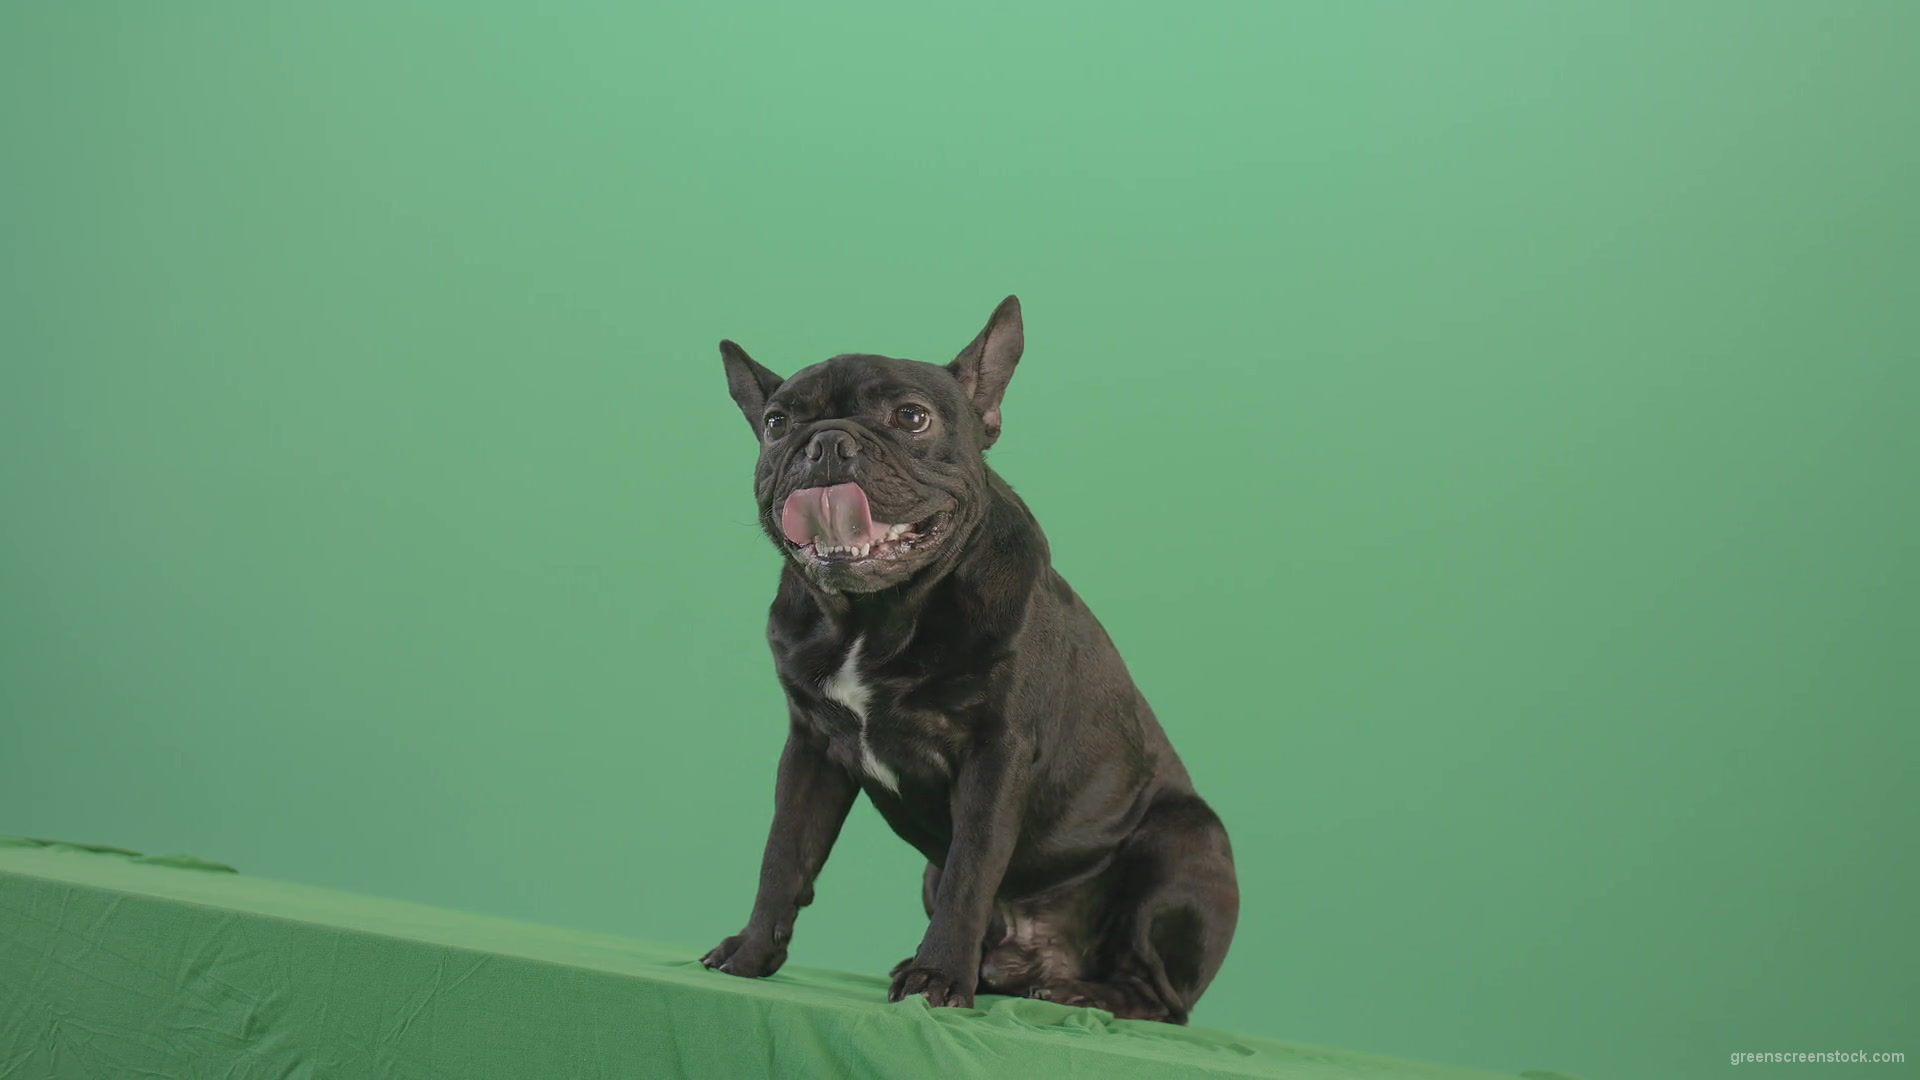 Lazy-french-bulldog-animal-dog-posing-on-green-screen-4K-Video-Footage-1920_009 Green Screen Stock